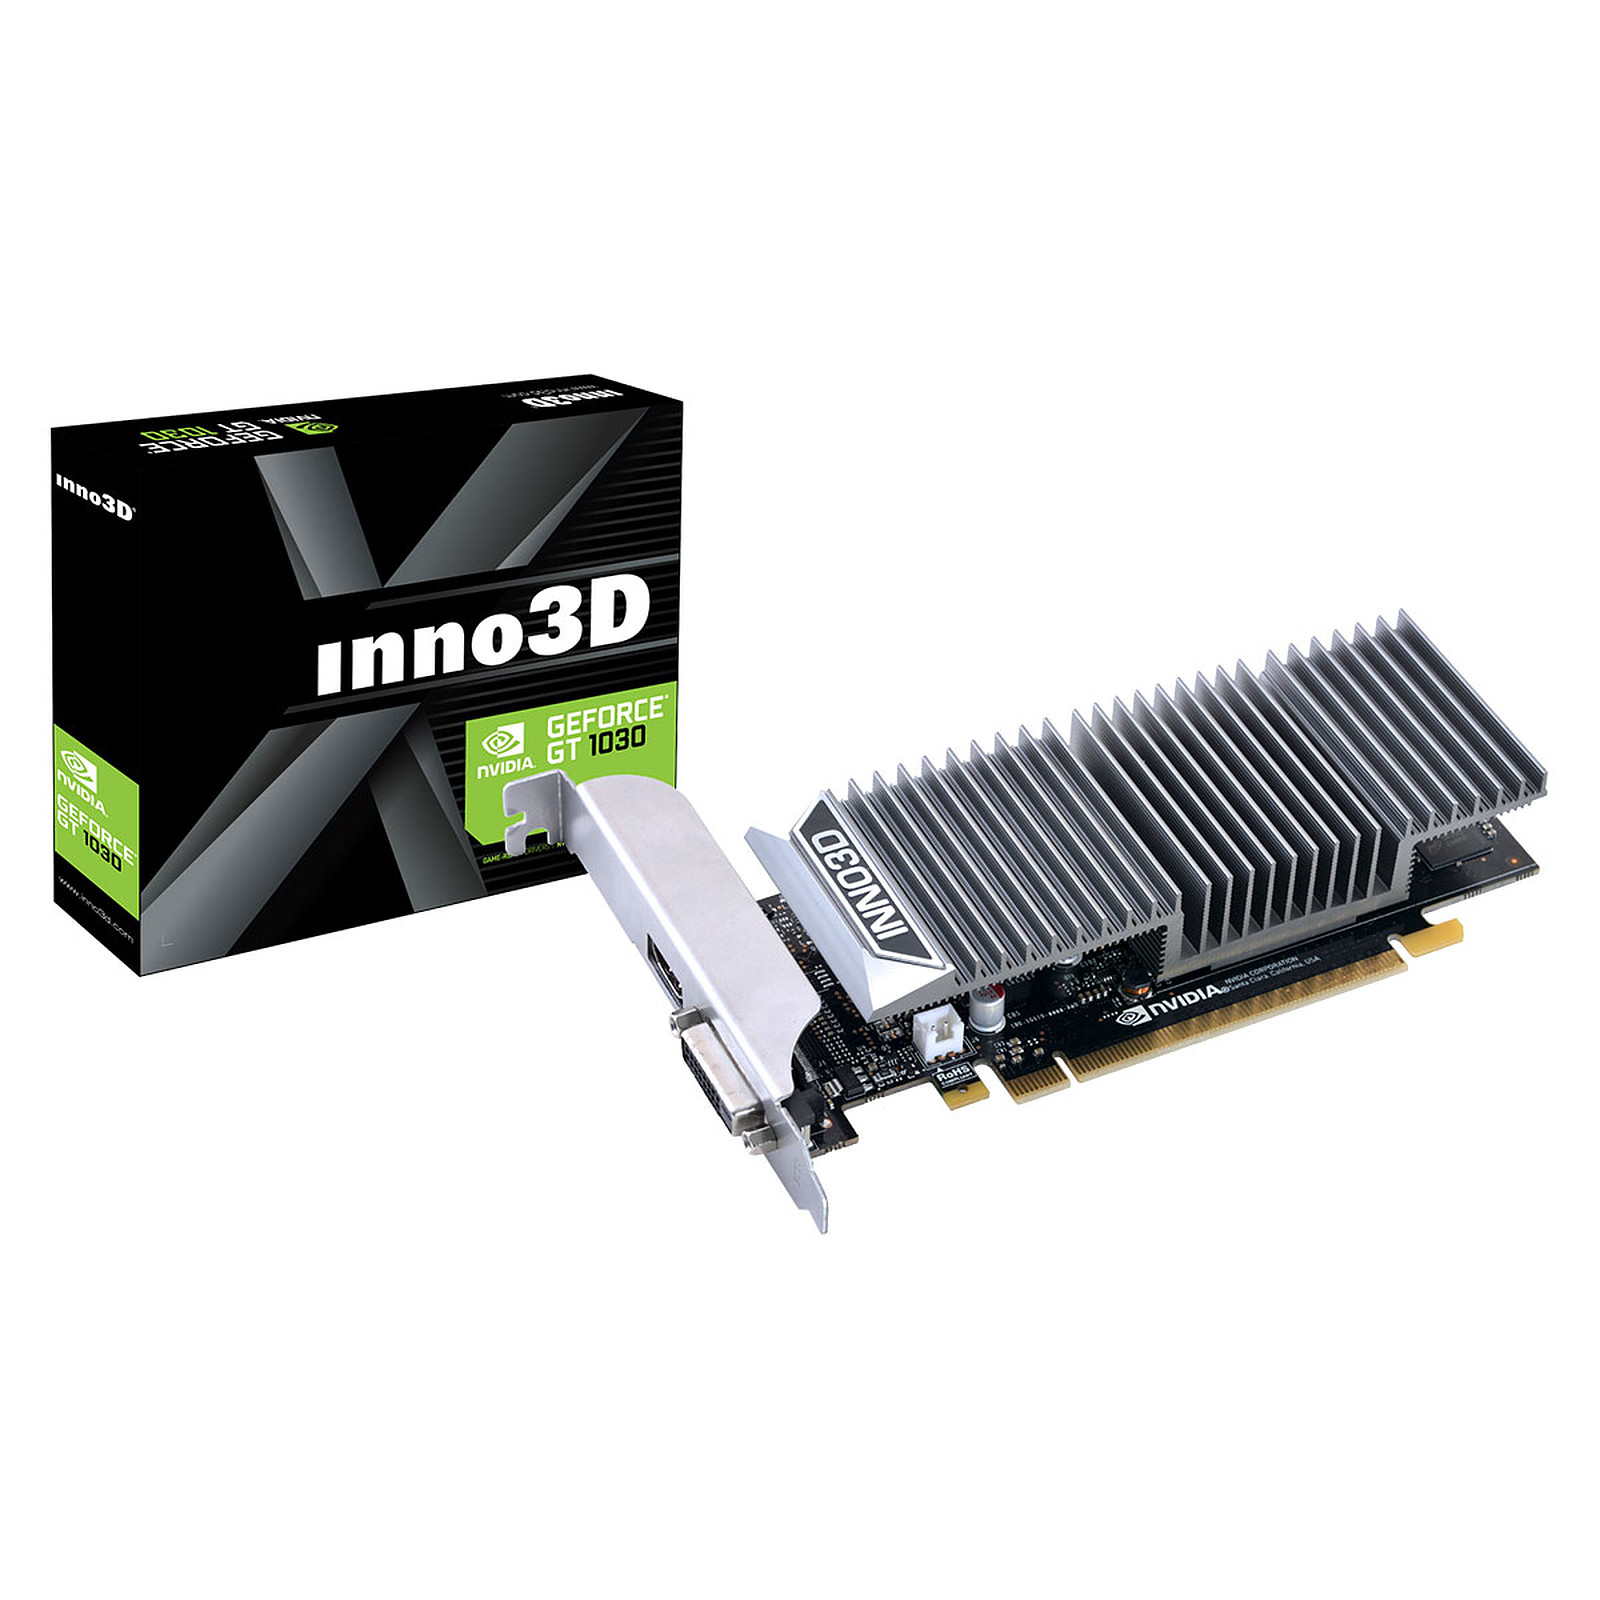 Inno3D GeForce GT 1030 0dB - Carte graphique Inno 3D